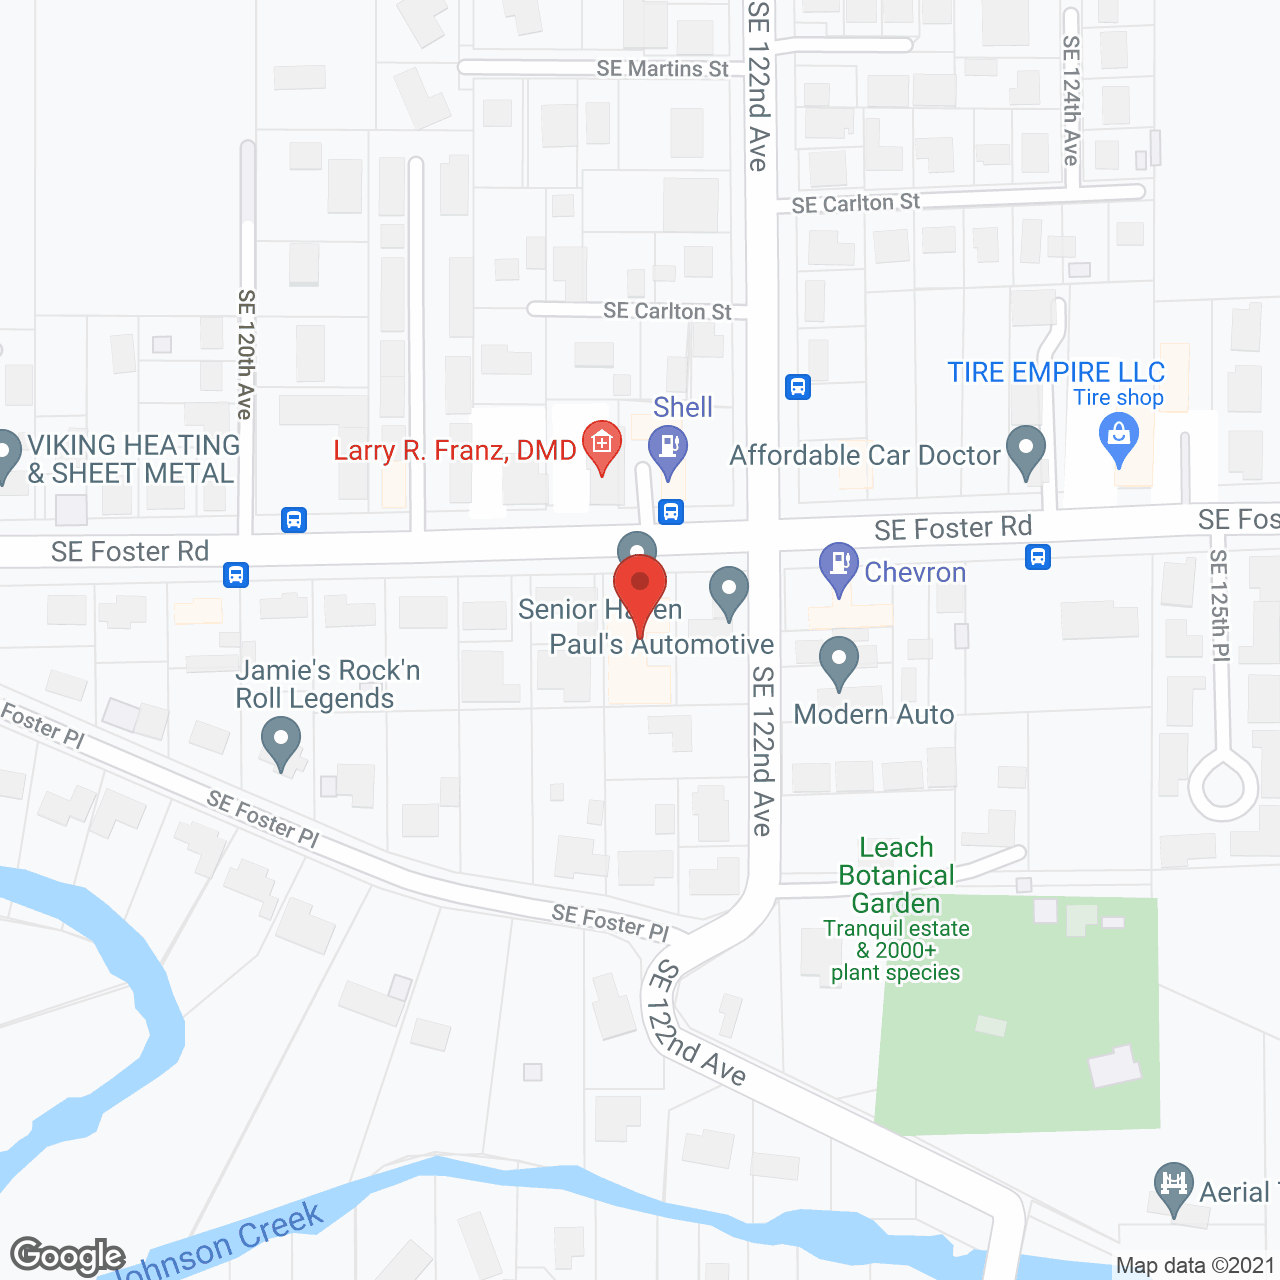 Senior Haven in google map